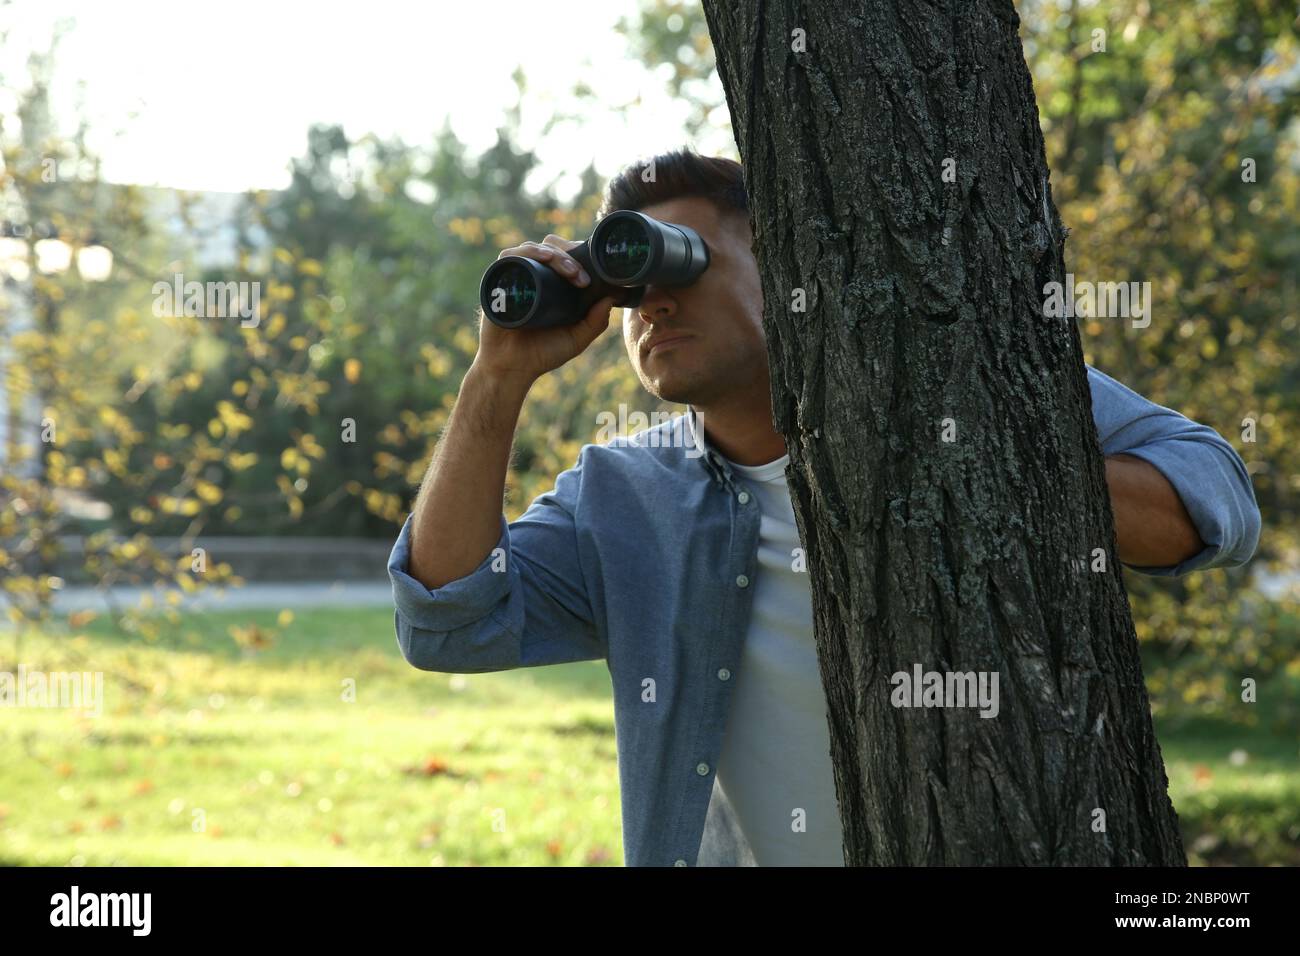 Jealous man with binoculars spying on ex girlfriend in park Stock Photo